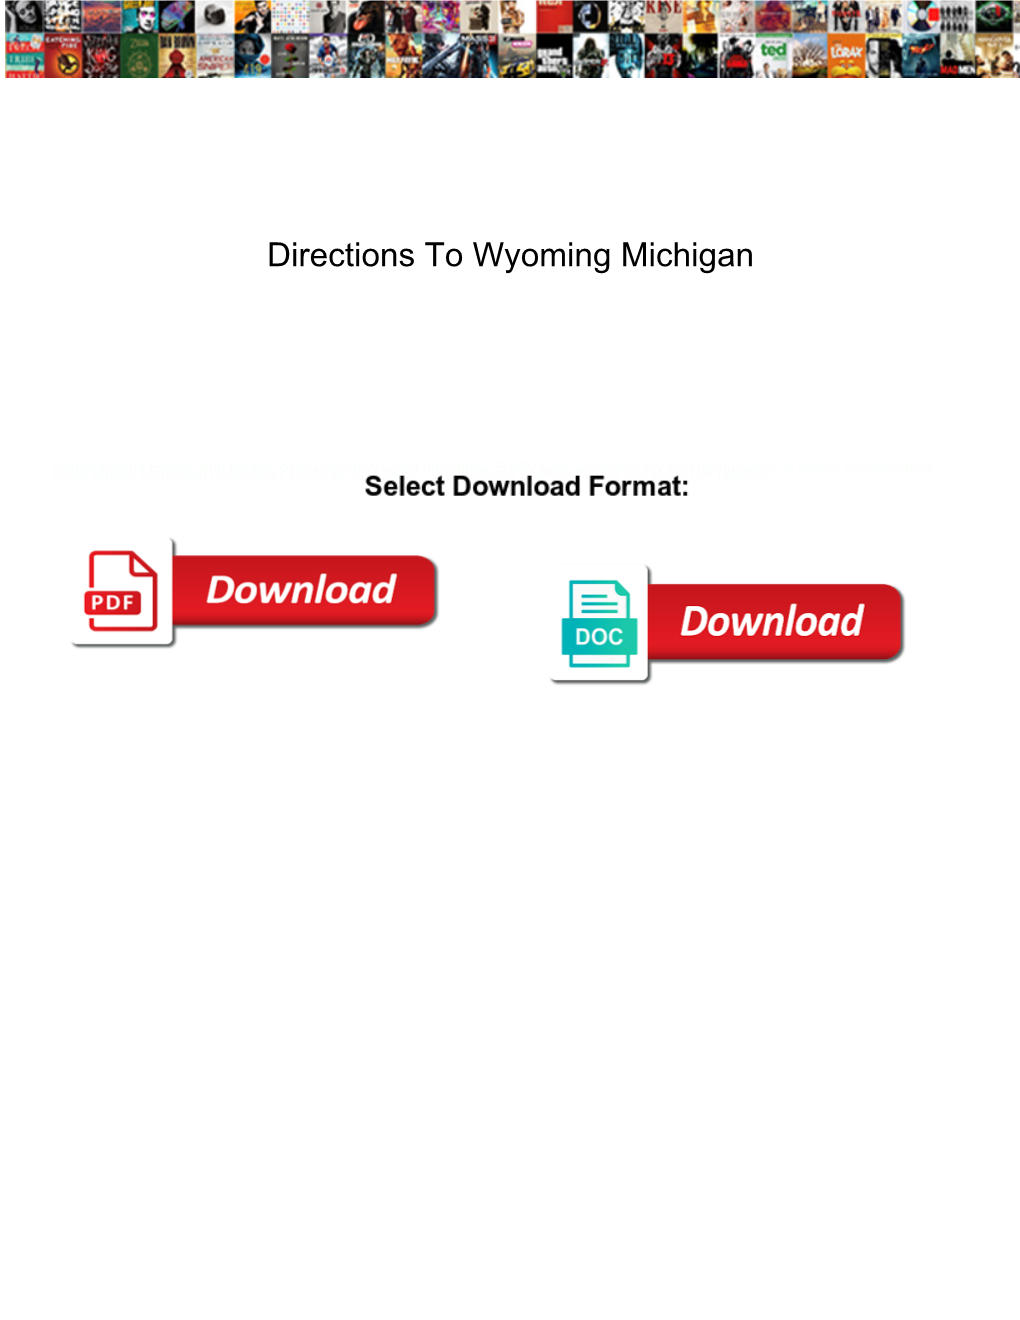 Directions to Wyoming Michigan